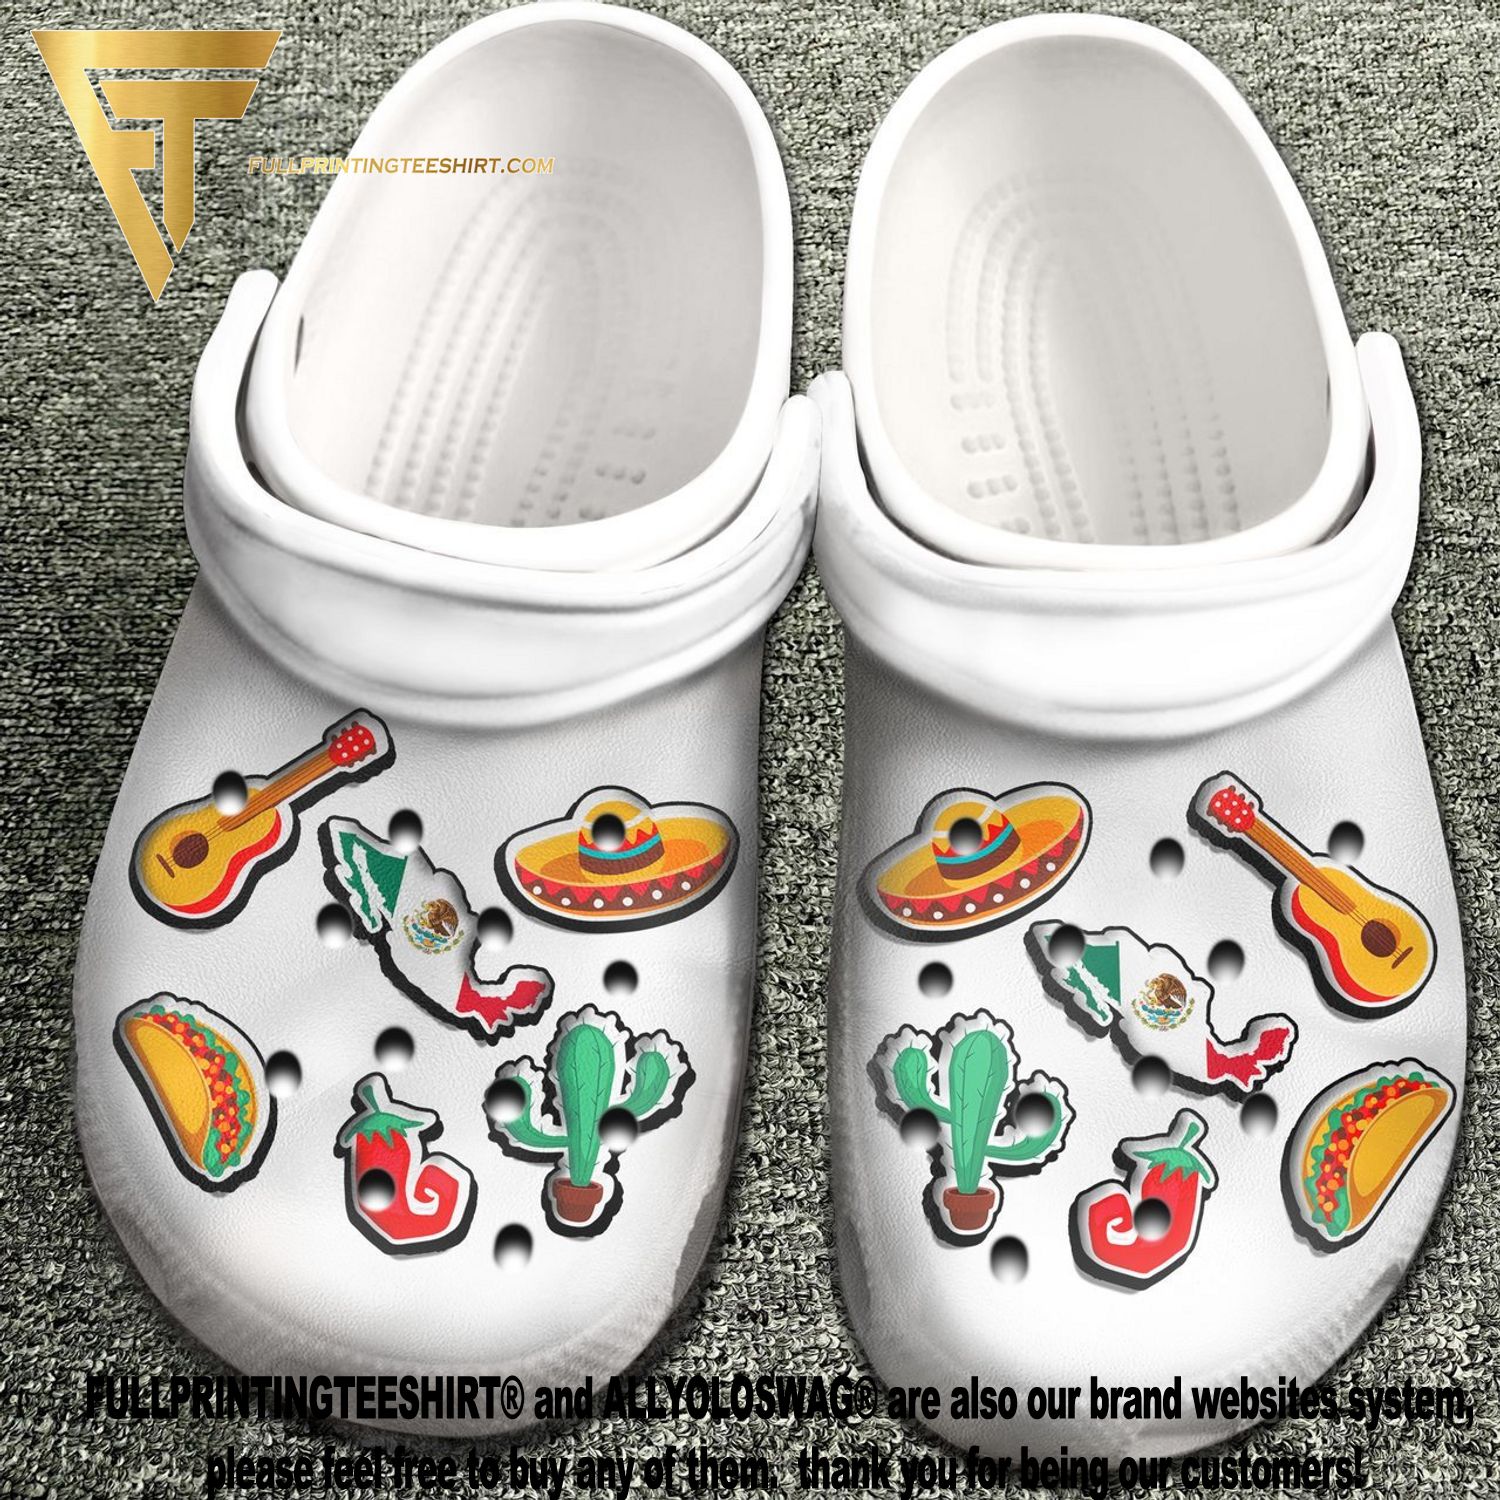  trendy designer hypebeast Shoe Charms for croc shoe